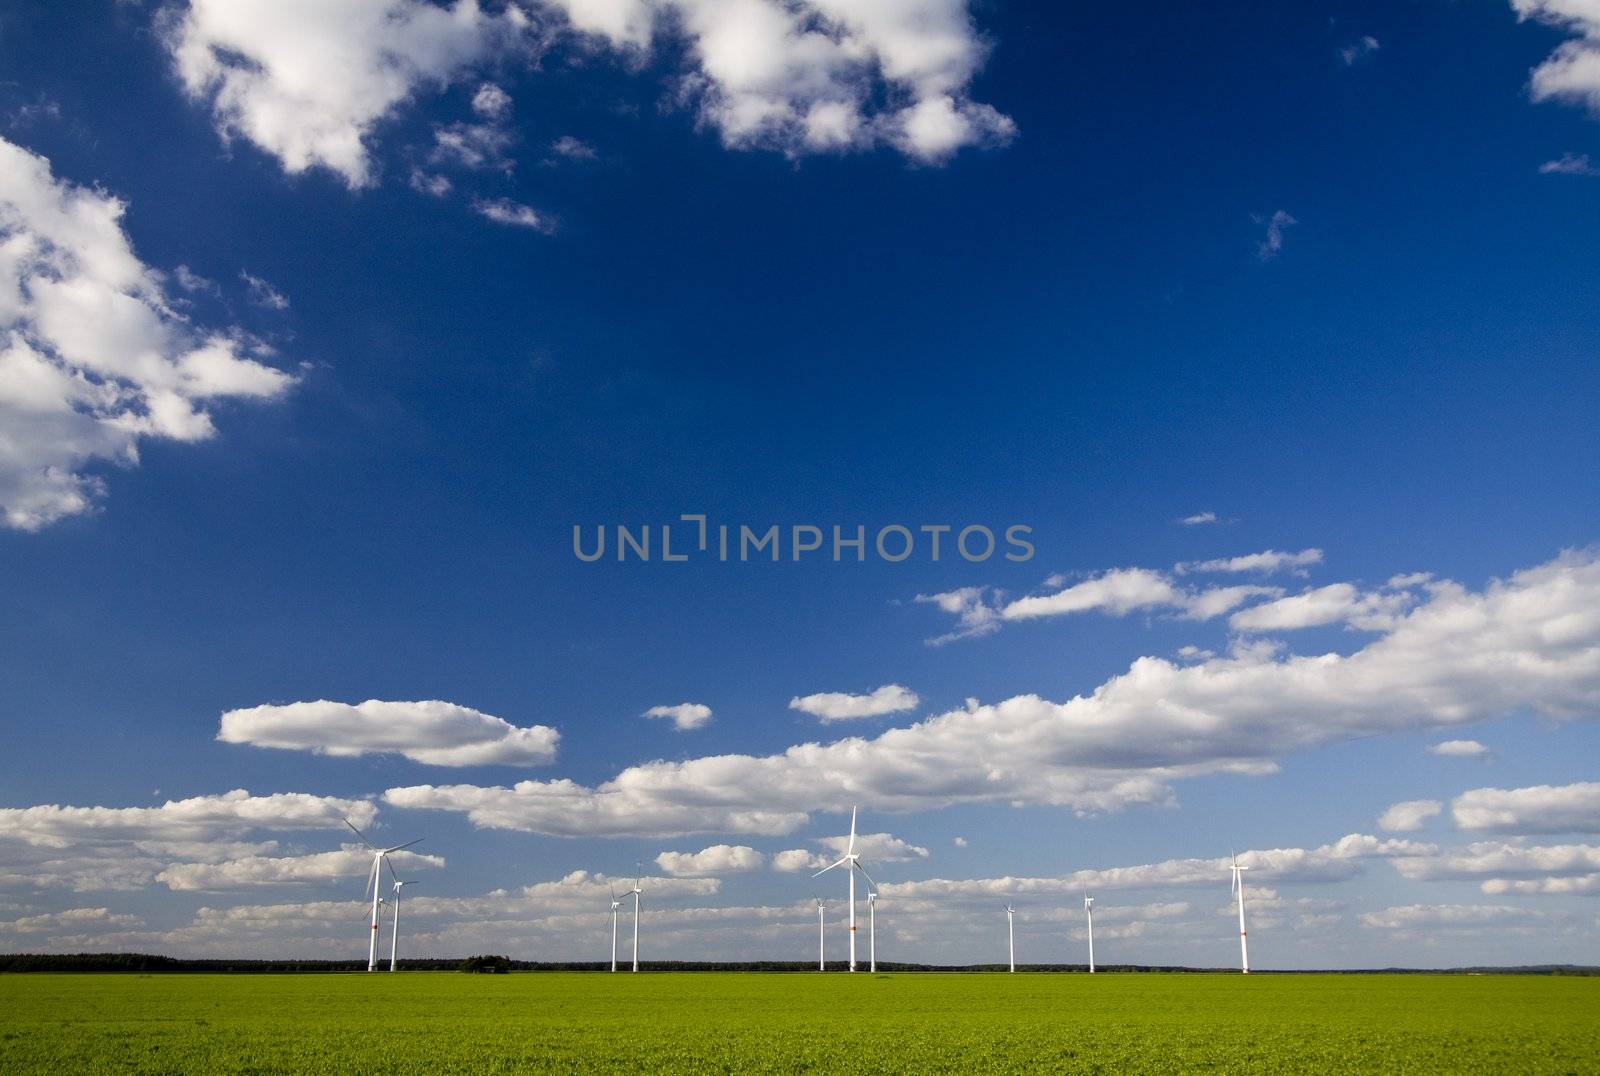 Landscape with windmills by Gbuglok